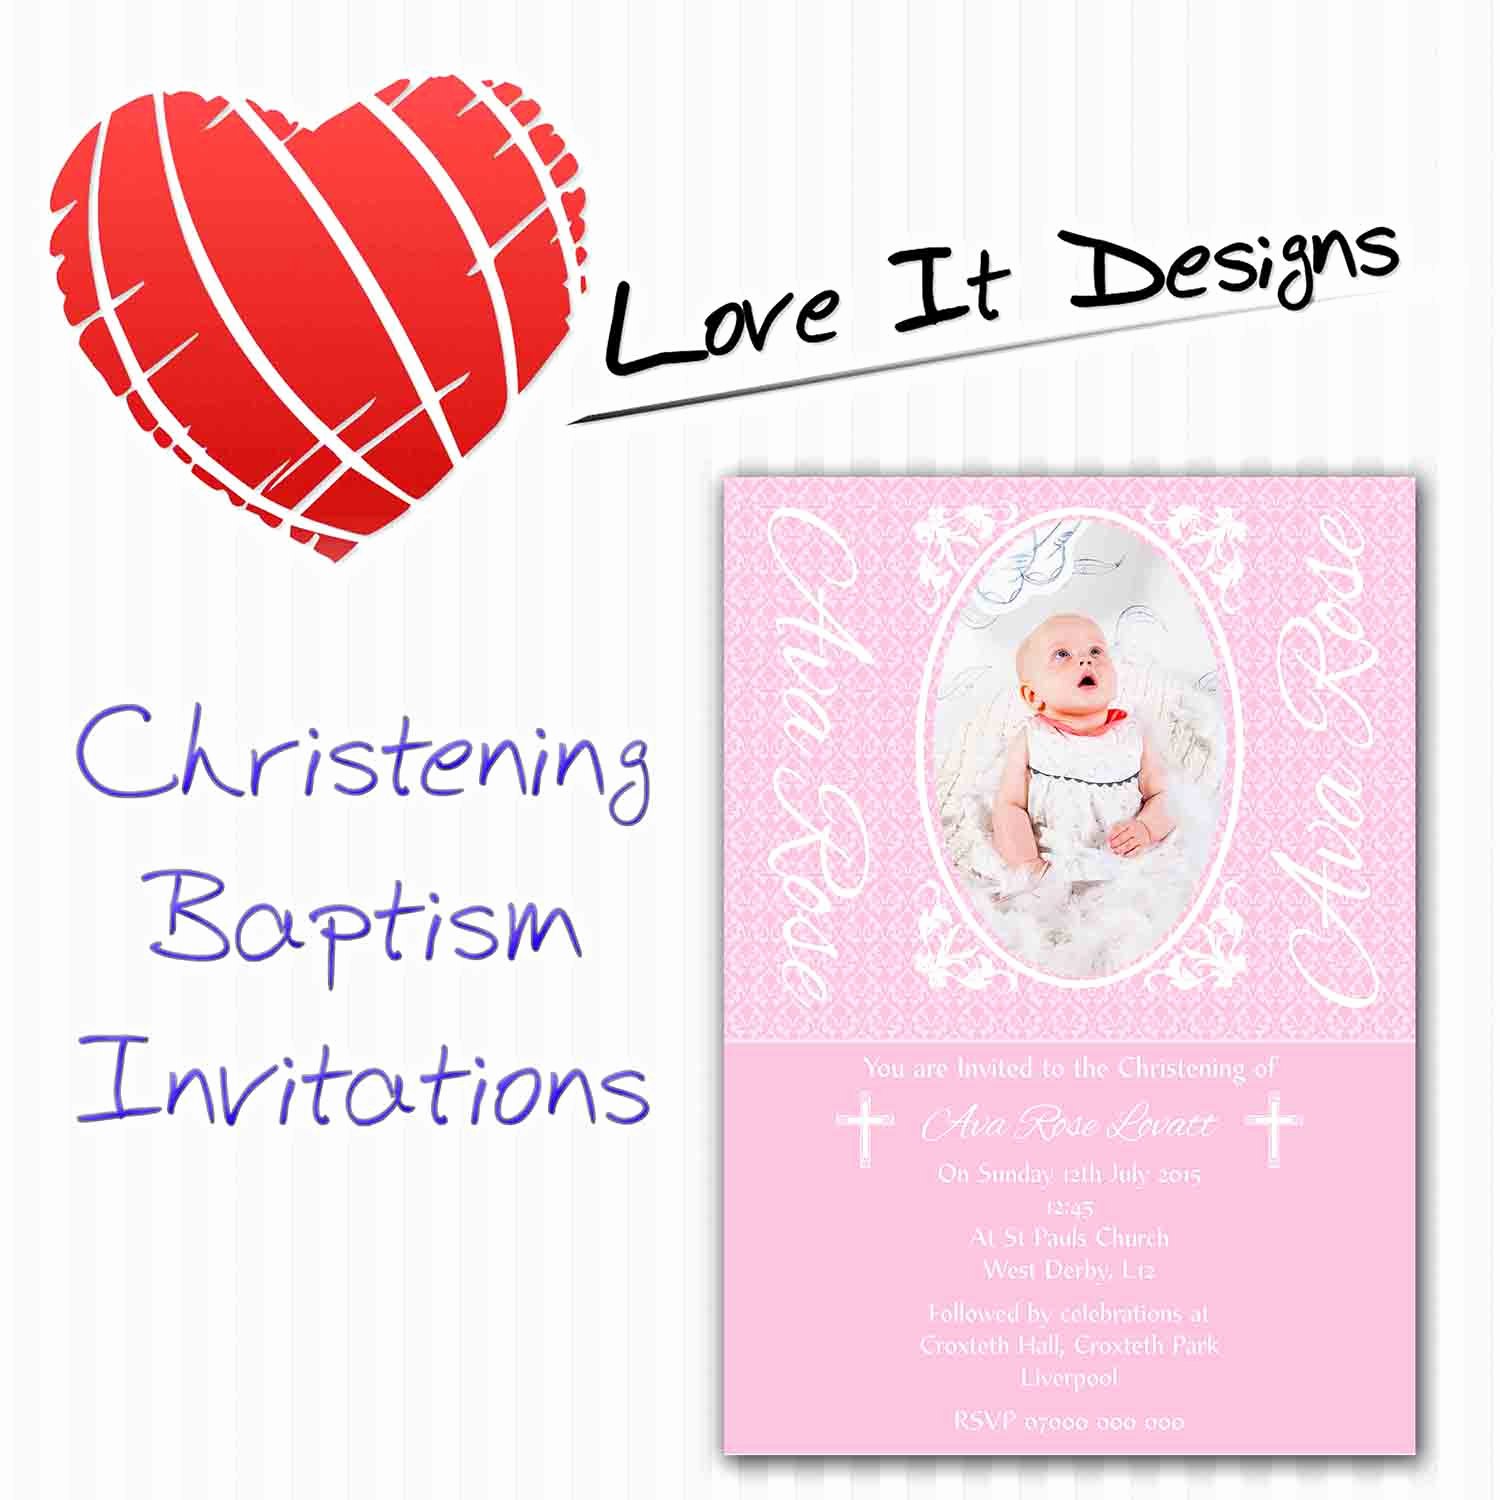 Do It Yourself Baptism Invitation Inspirational Christening Baptism Invitations A002 Love It Designs